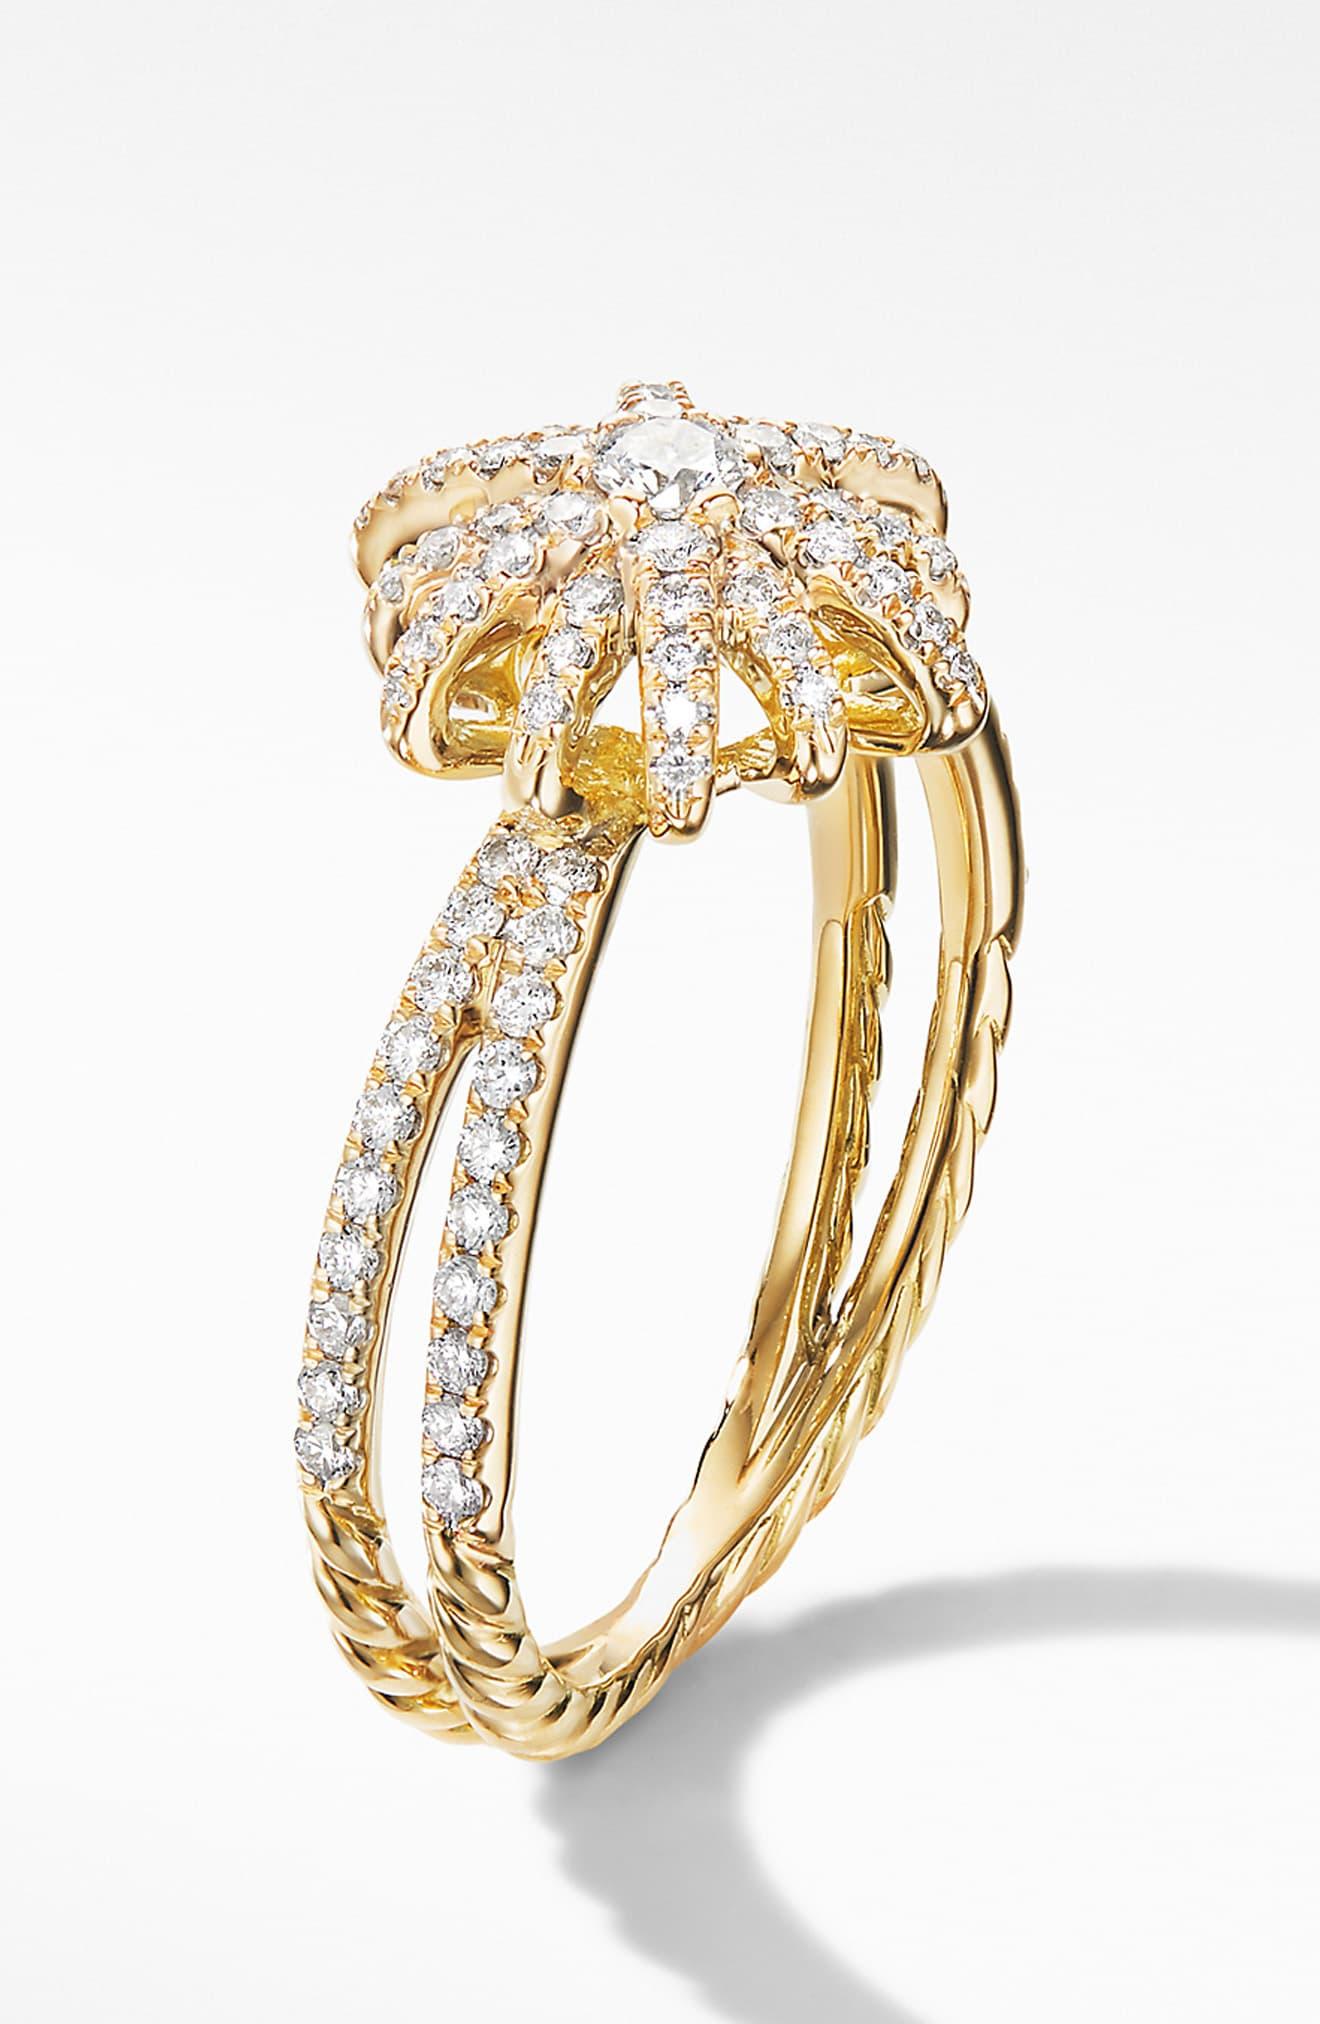 David Yurman Starburst Ring In 18k Yellow Gold With Diamonds in